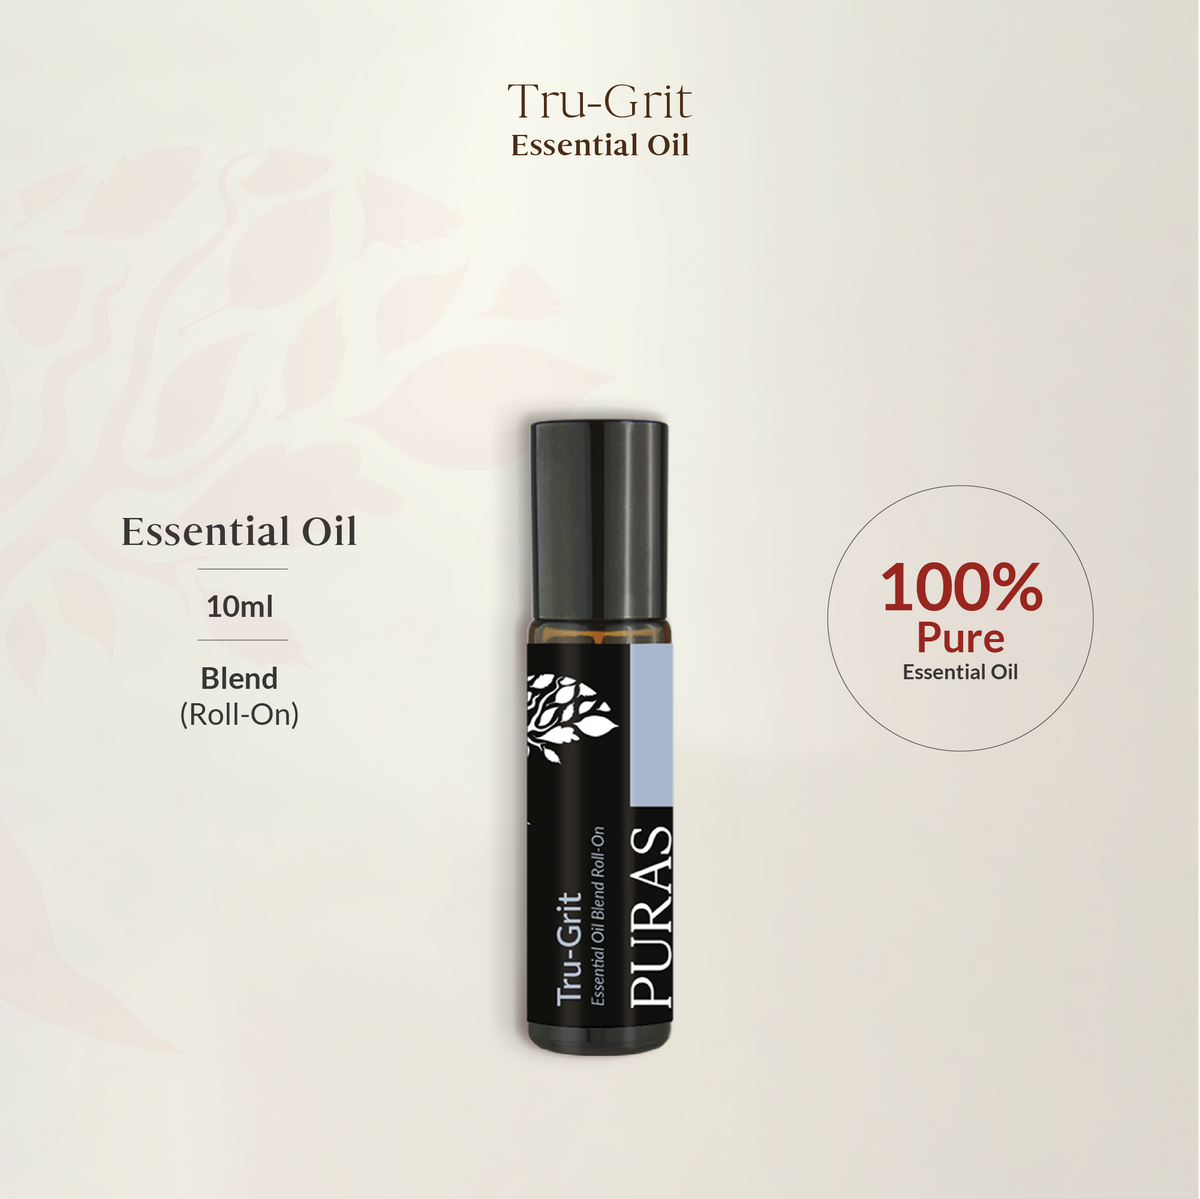 Tru-Grit Essential Oil Blend (Roll-On)